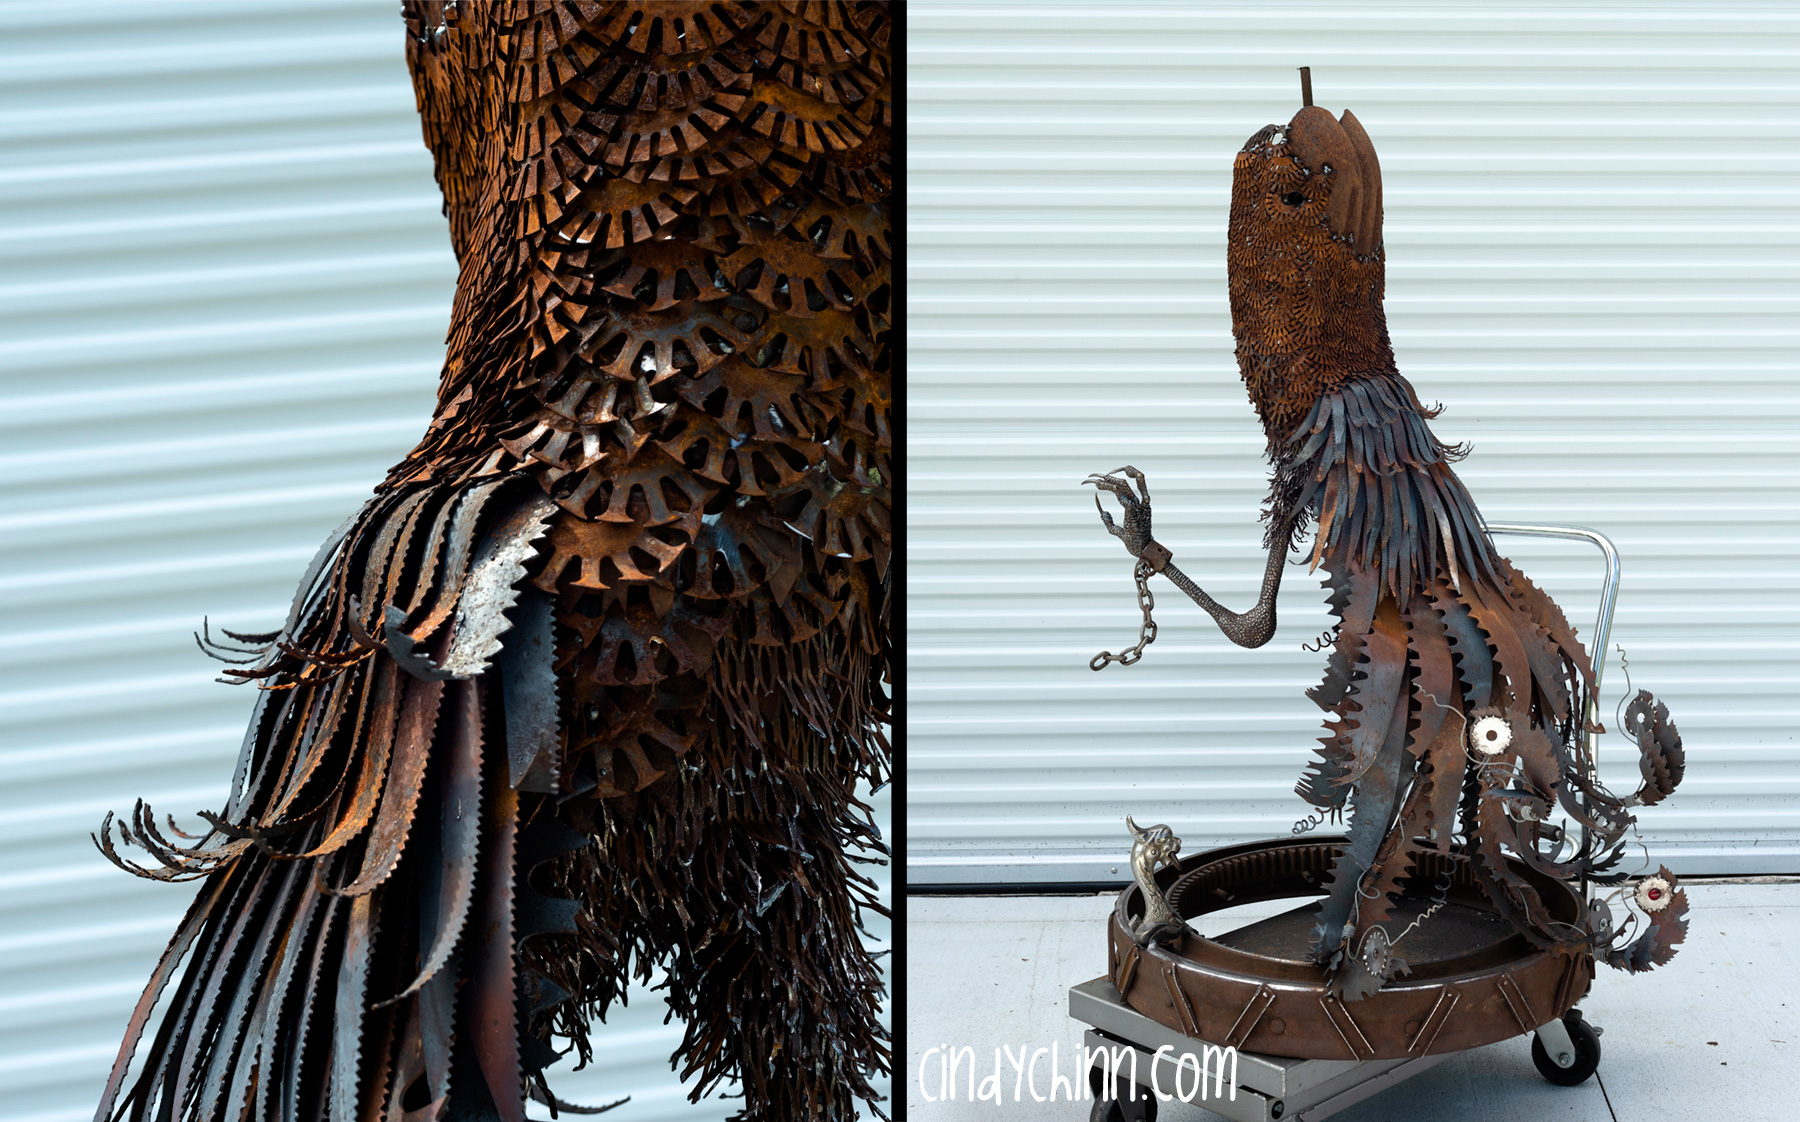 phoenix scrap metal sculpture by Cindy Chinn